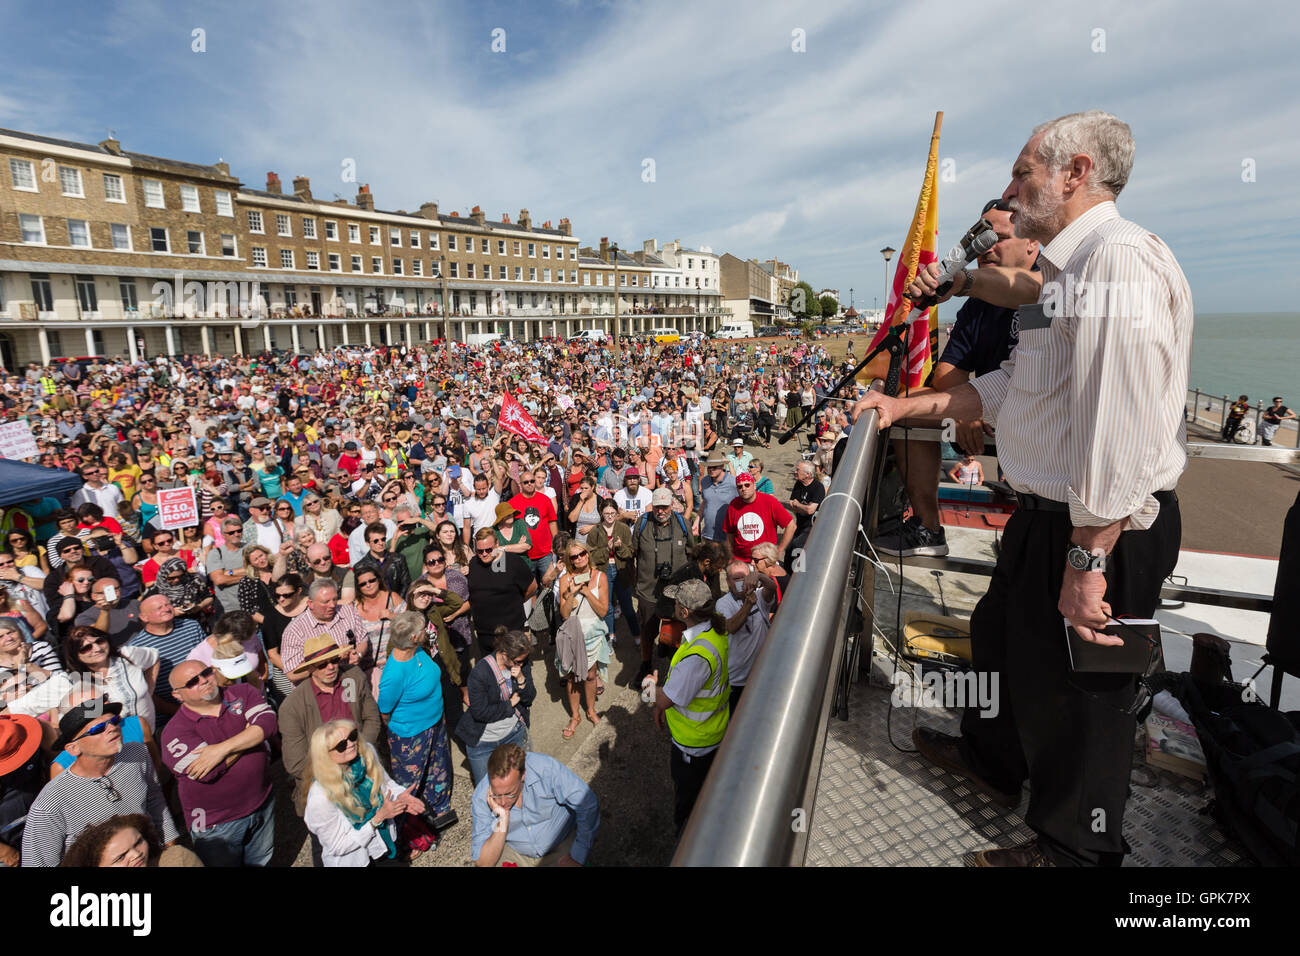 ramsgate-kent-uk-3rd-sept-2016-jeremy-corbyn-speaks-to-large-crowds-GPK7PX.jpg